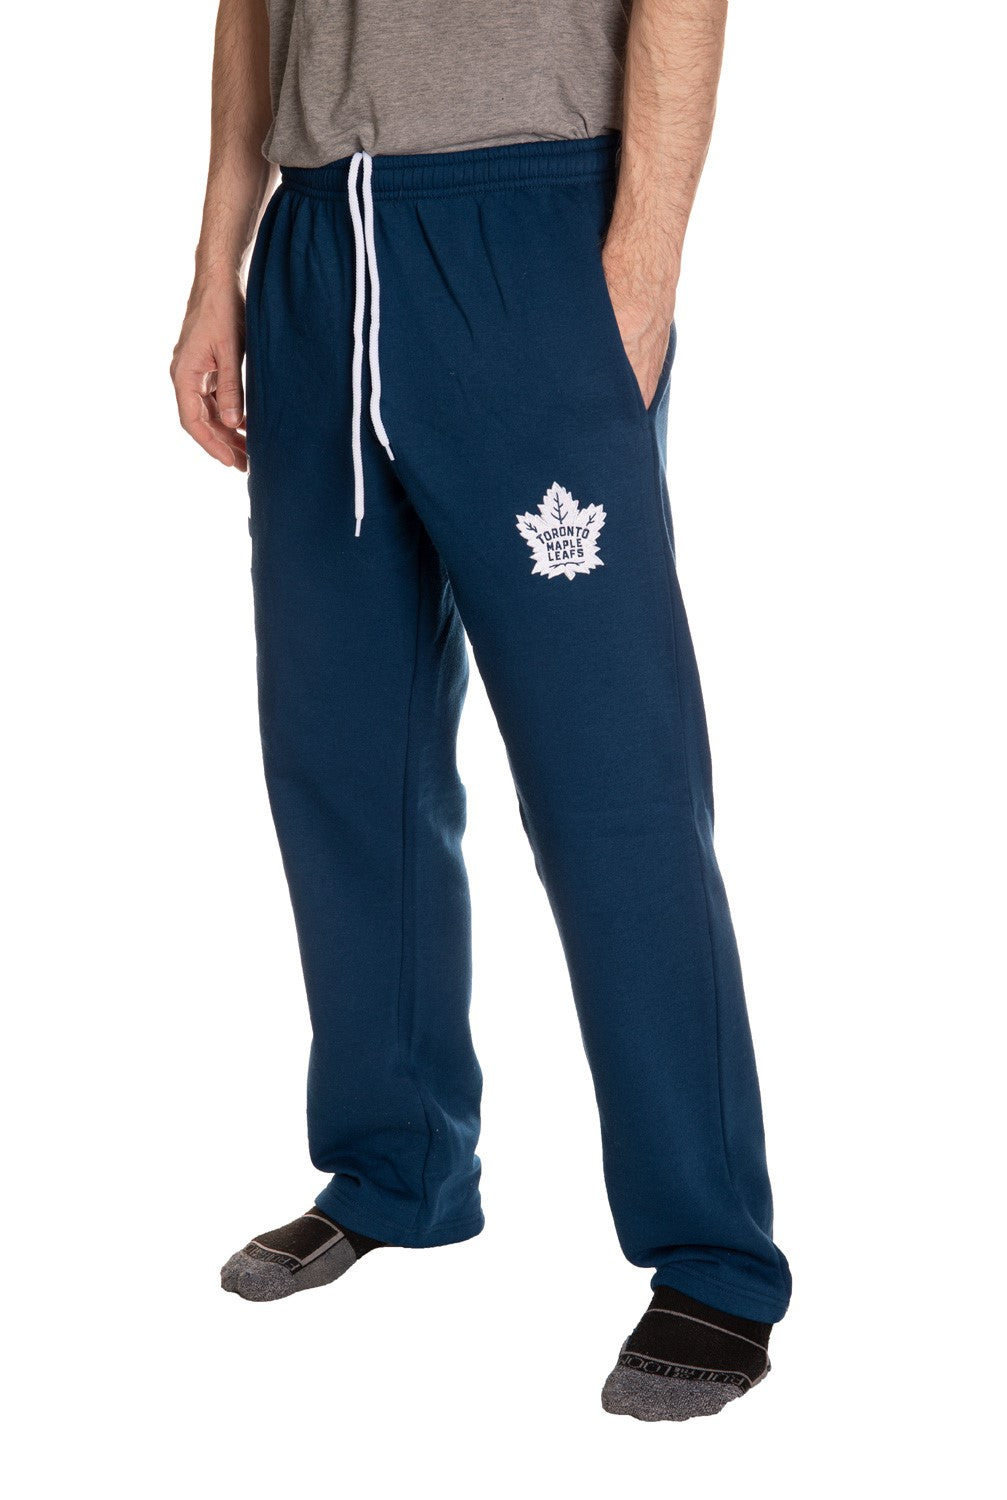 Toronto Maple Leafs NHL Hockey Uniform Men's Leggings